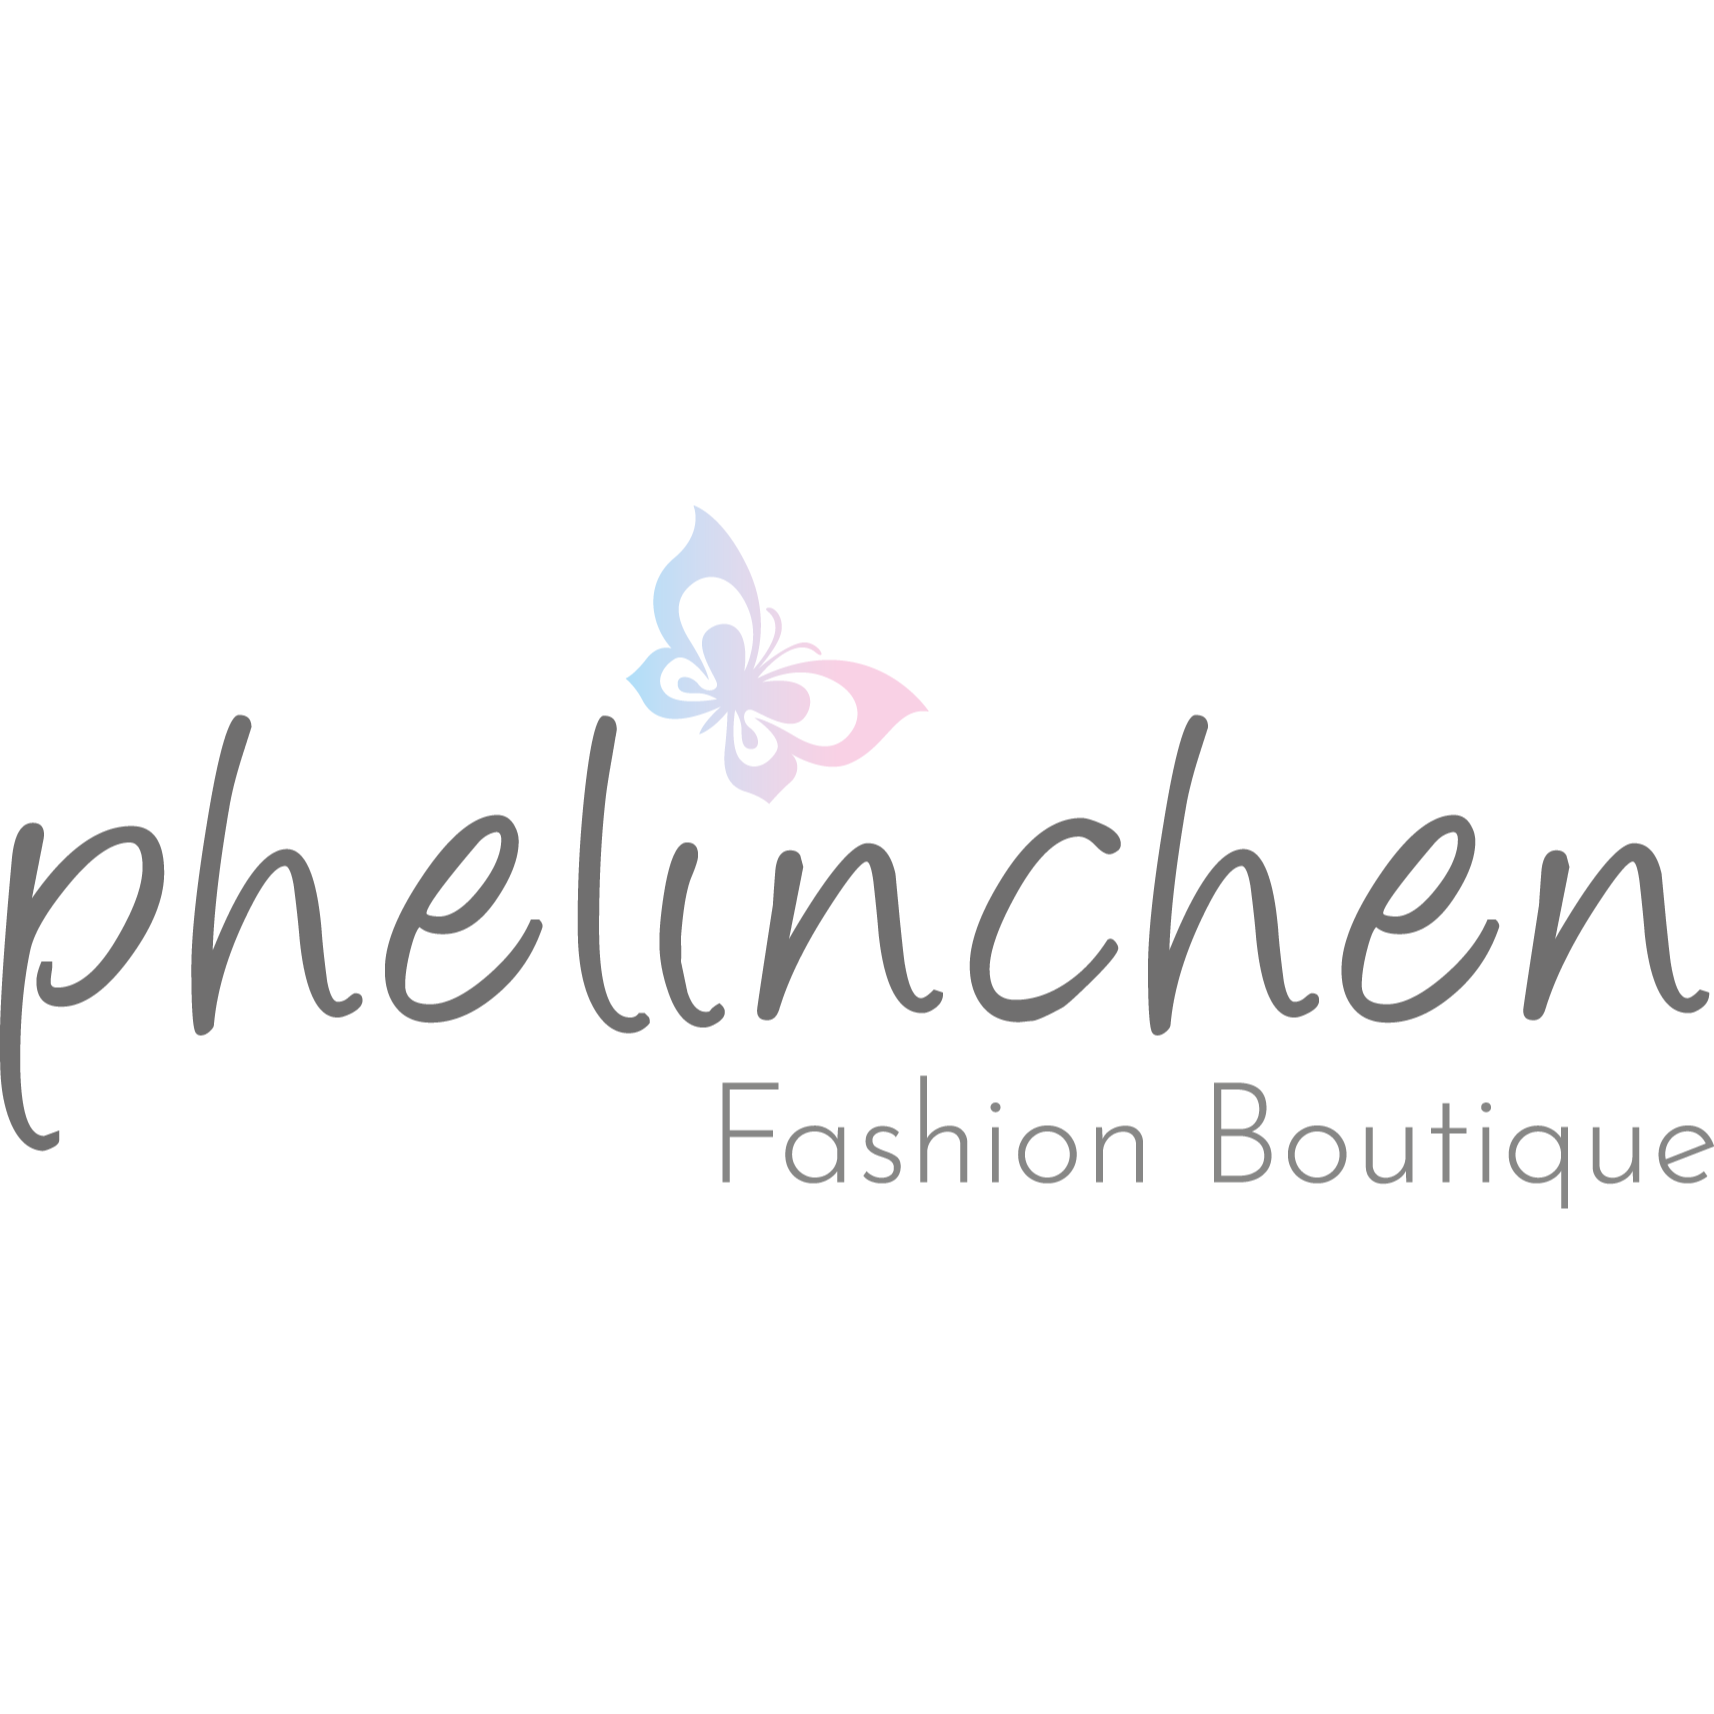 Phelinchen Fashion Boutique GmbH & Co KG Kindermoden München in München - Logo